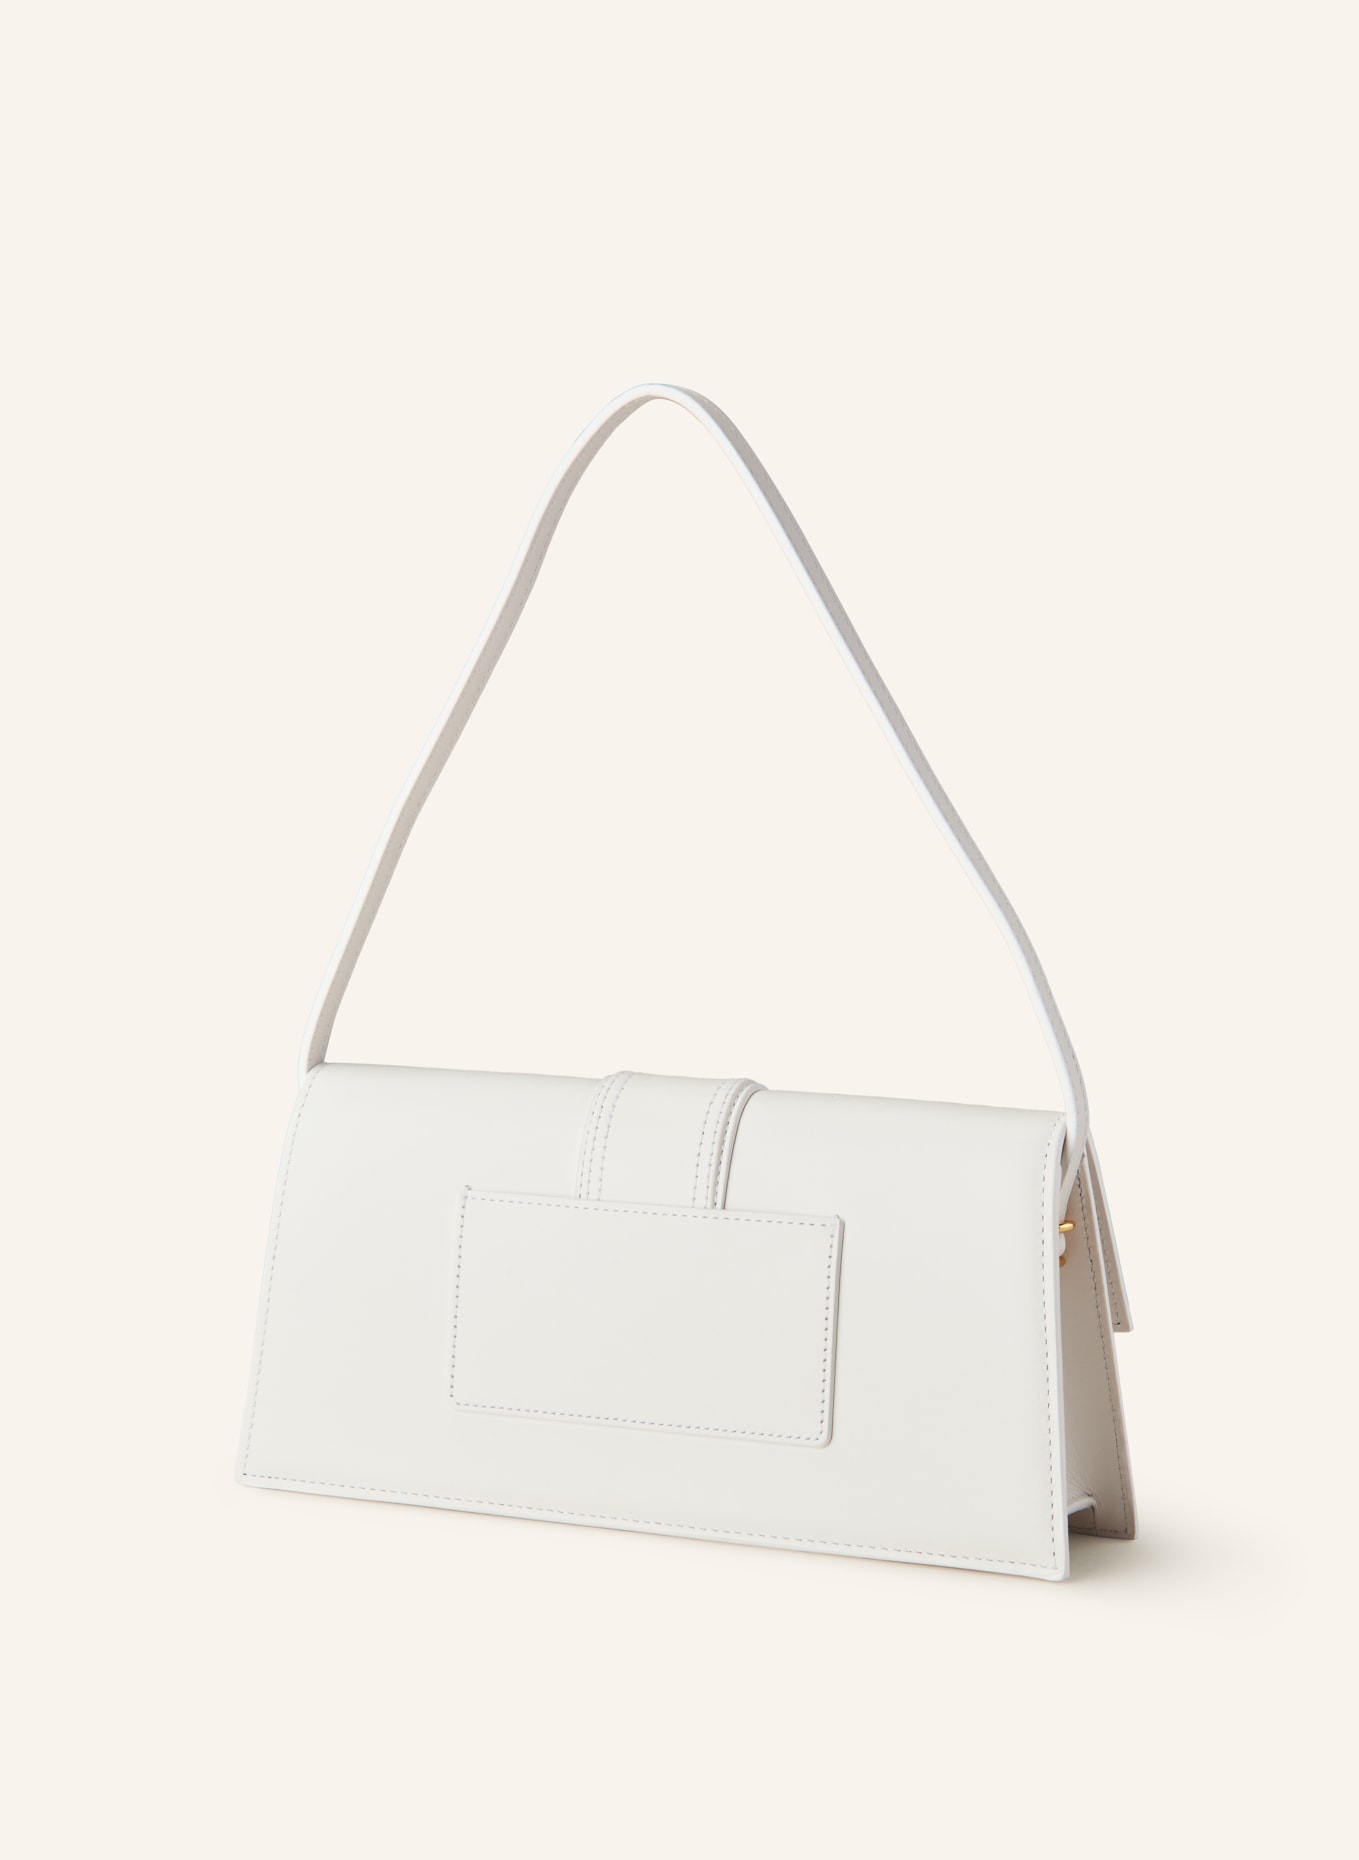 LNGOOR Handbags for Women, Shoulder Bags Leather Drawstring Long Strap  Shoulder Purses Bags (Gray) - Walmart.com